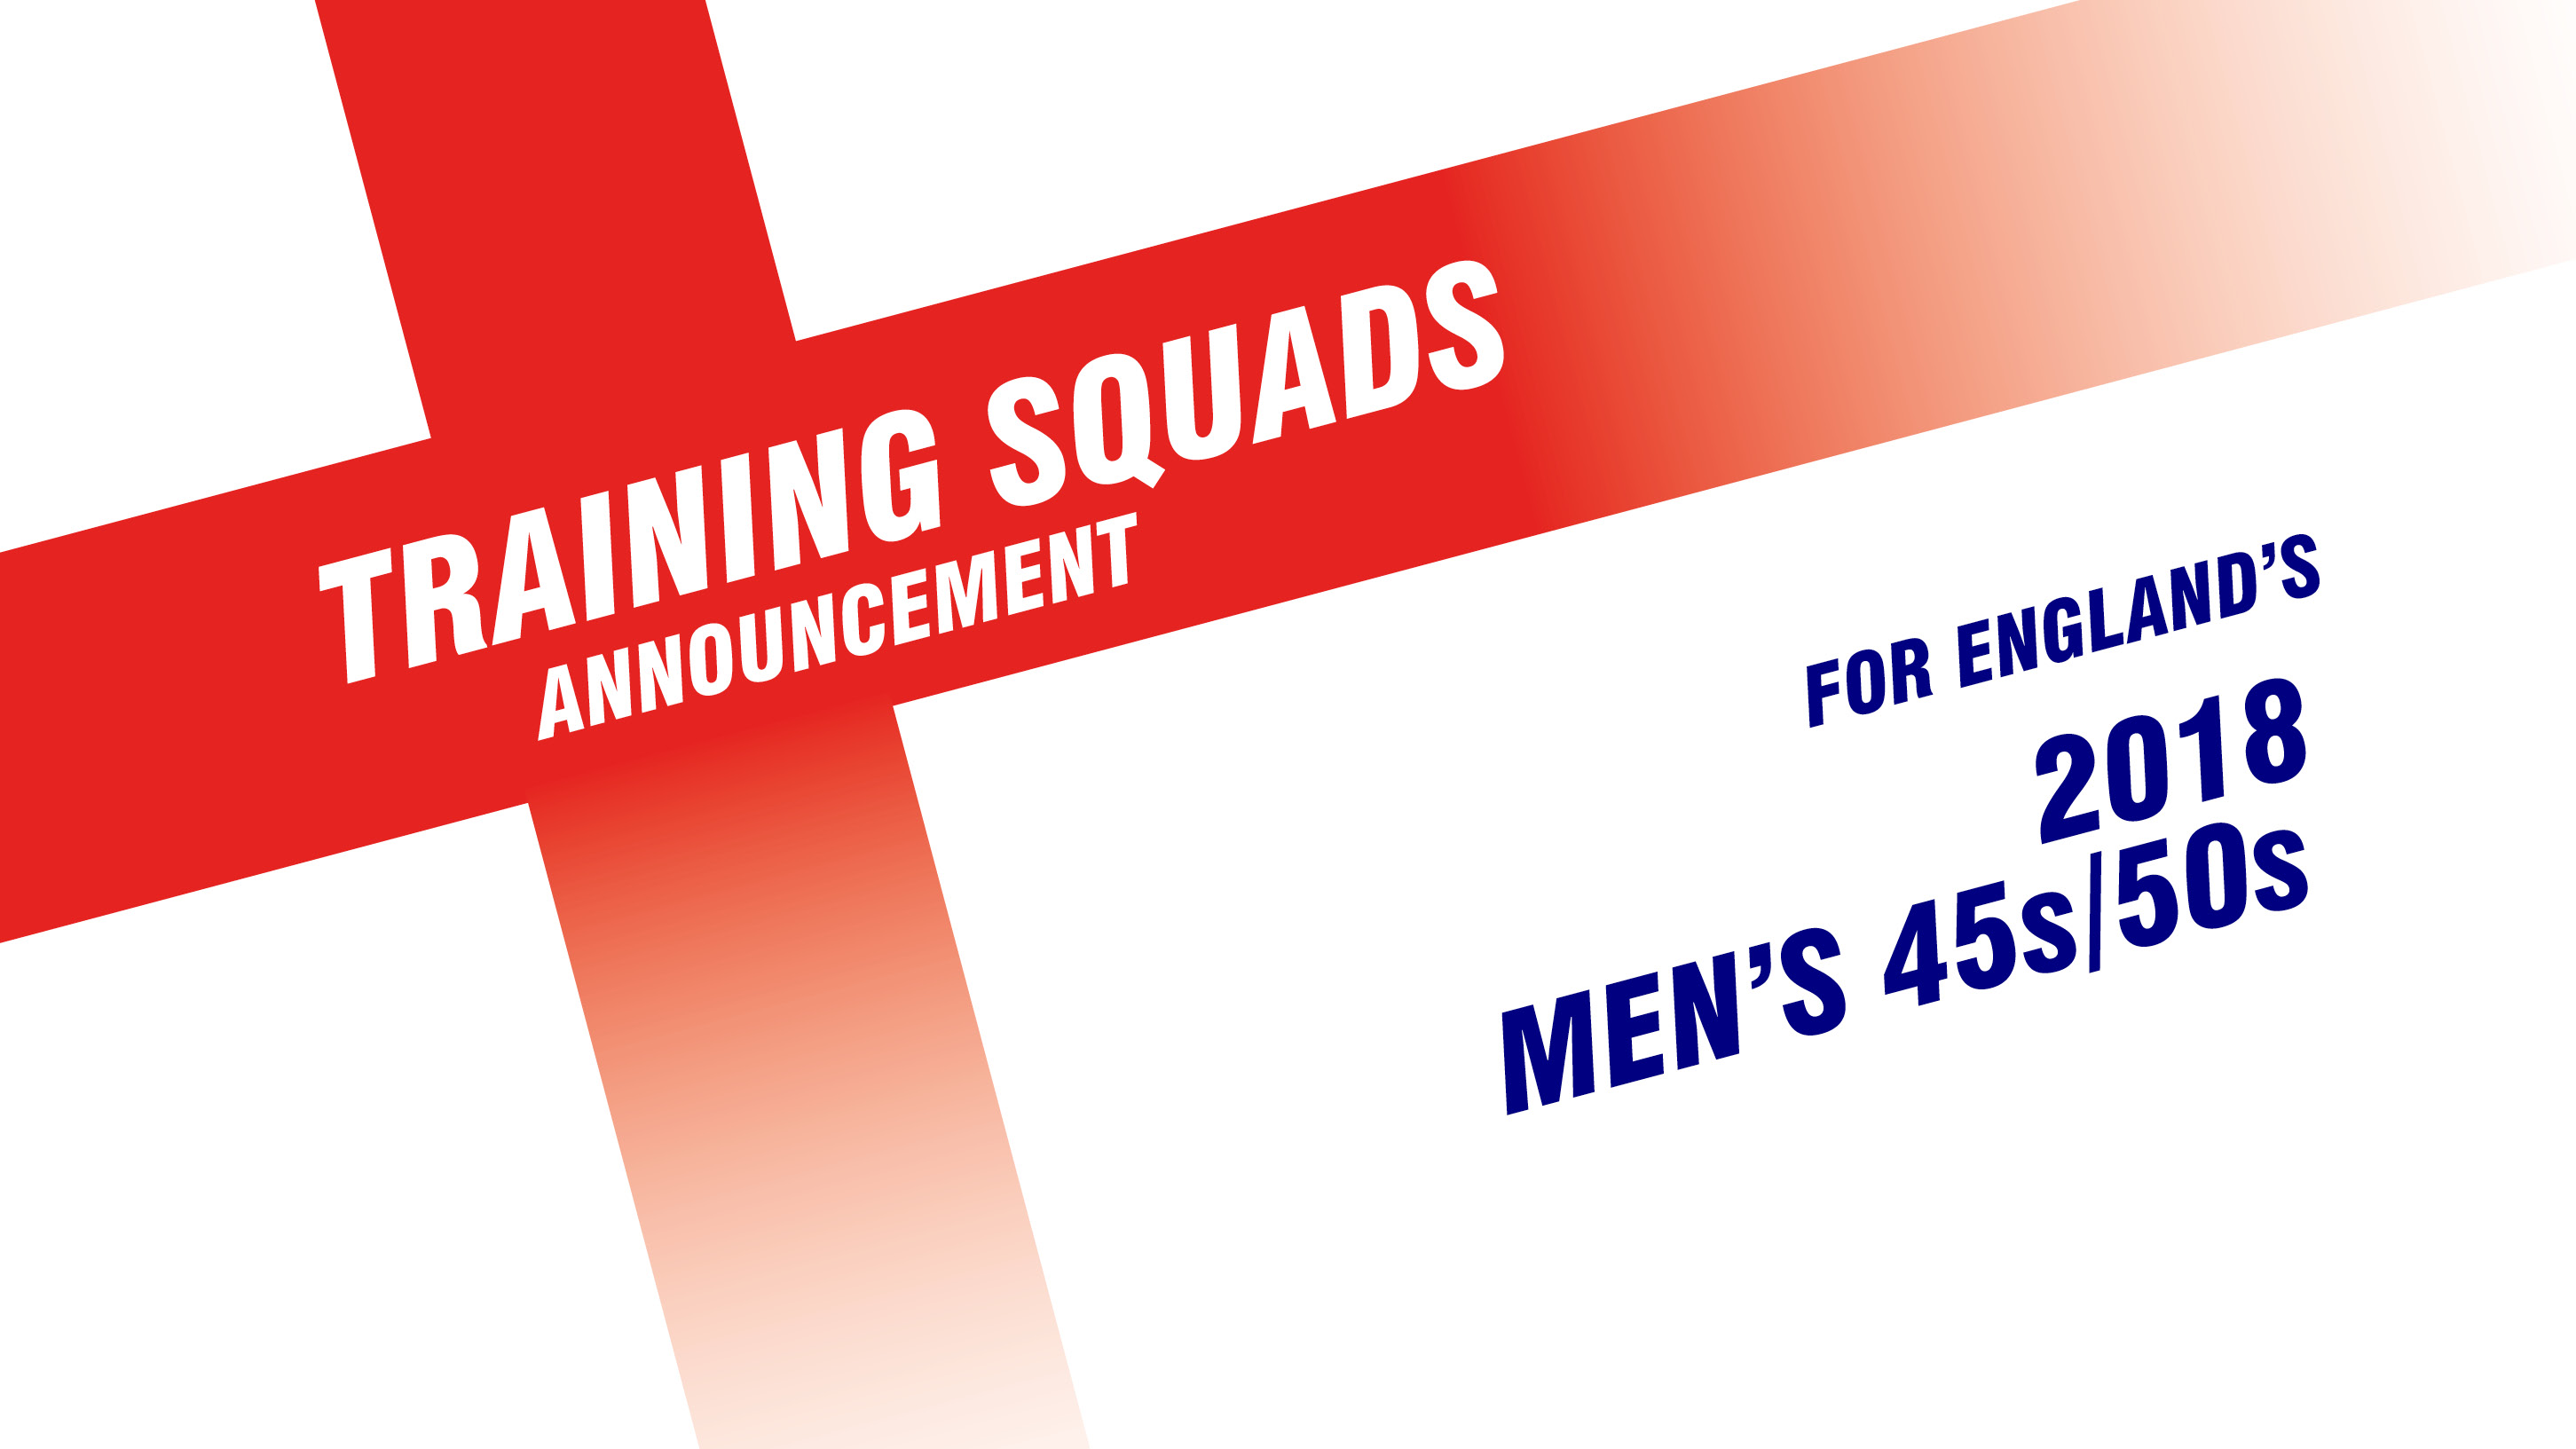 Men’s 45s/50s High Performance Training Squad announced